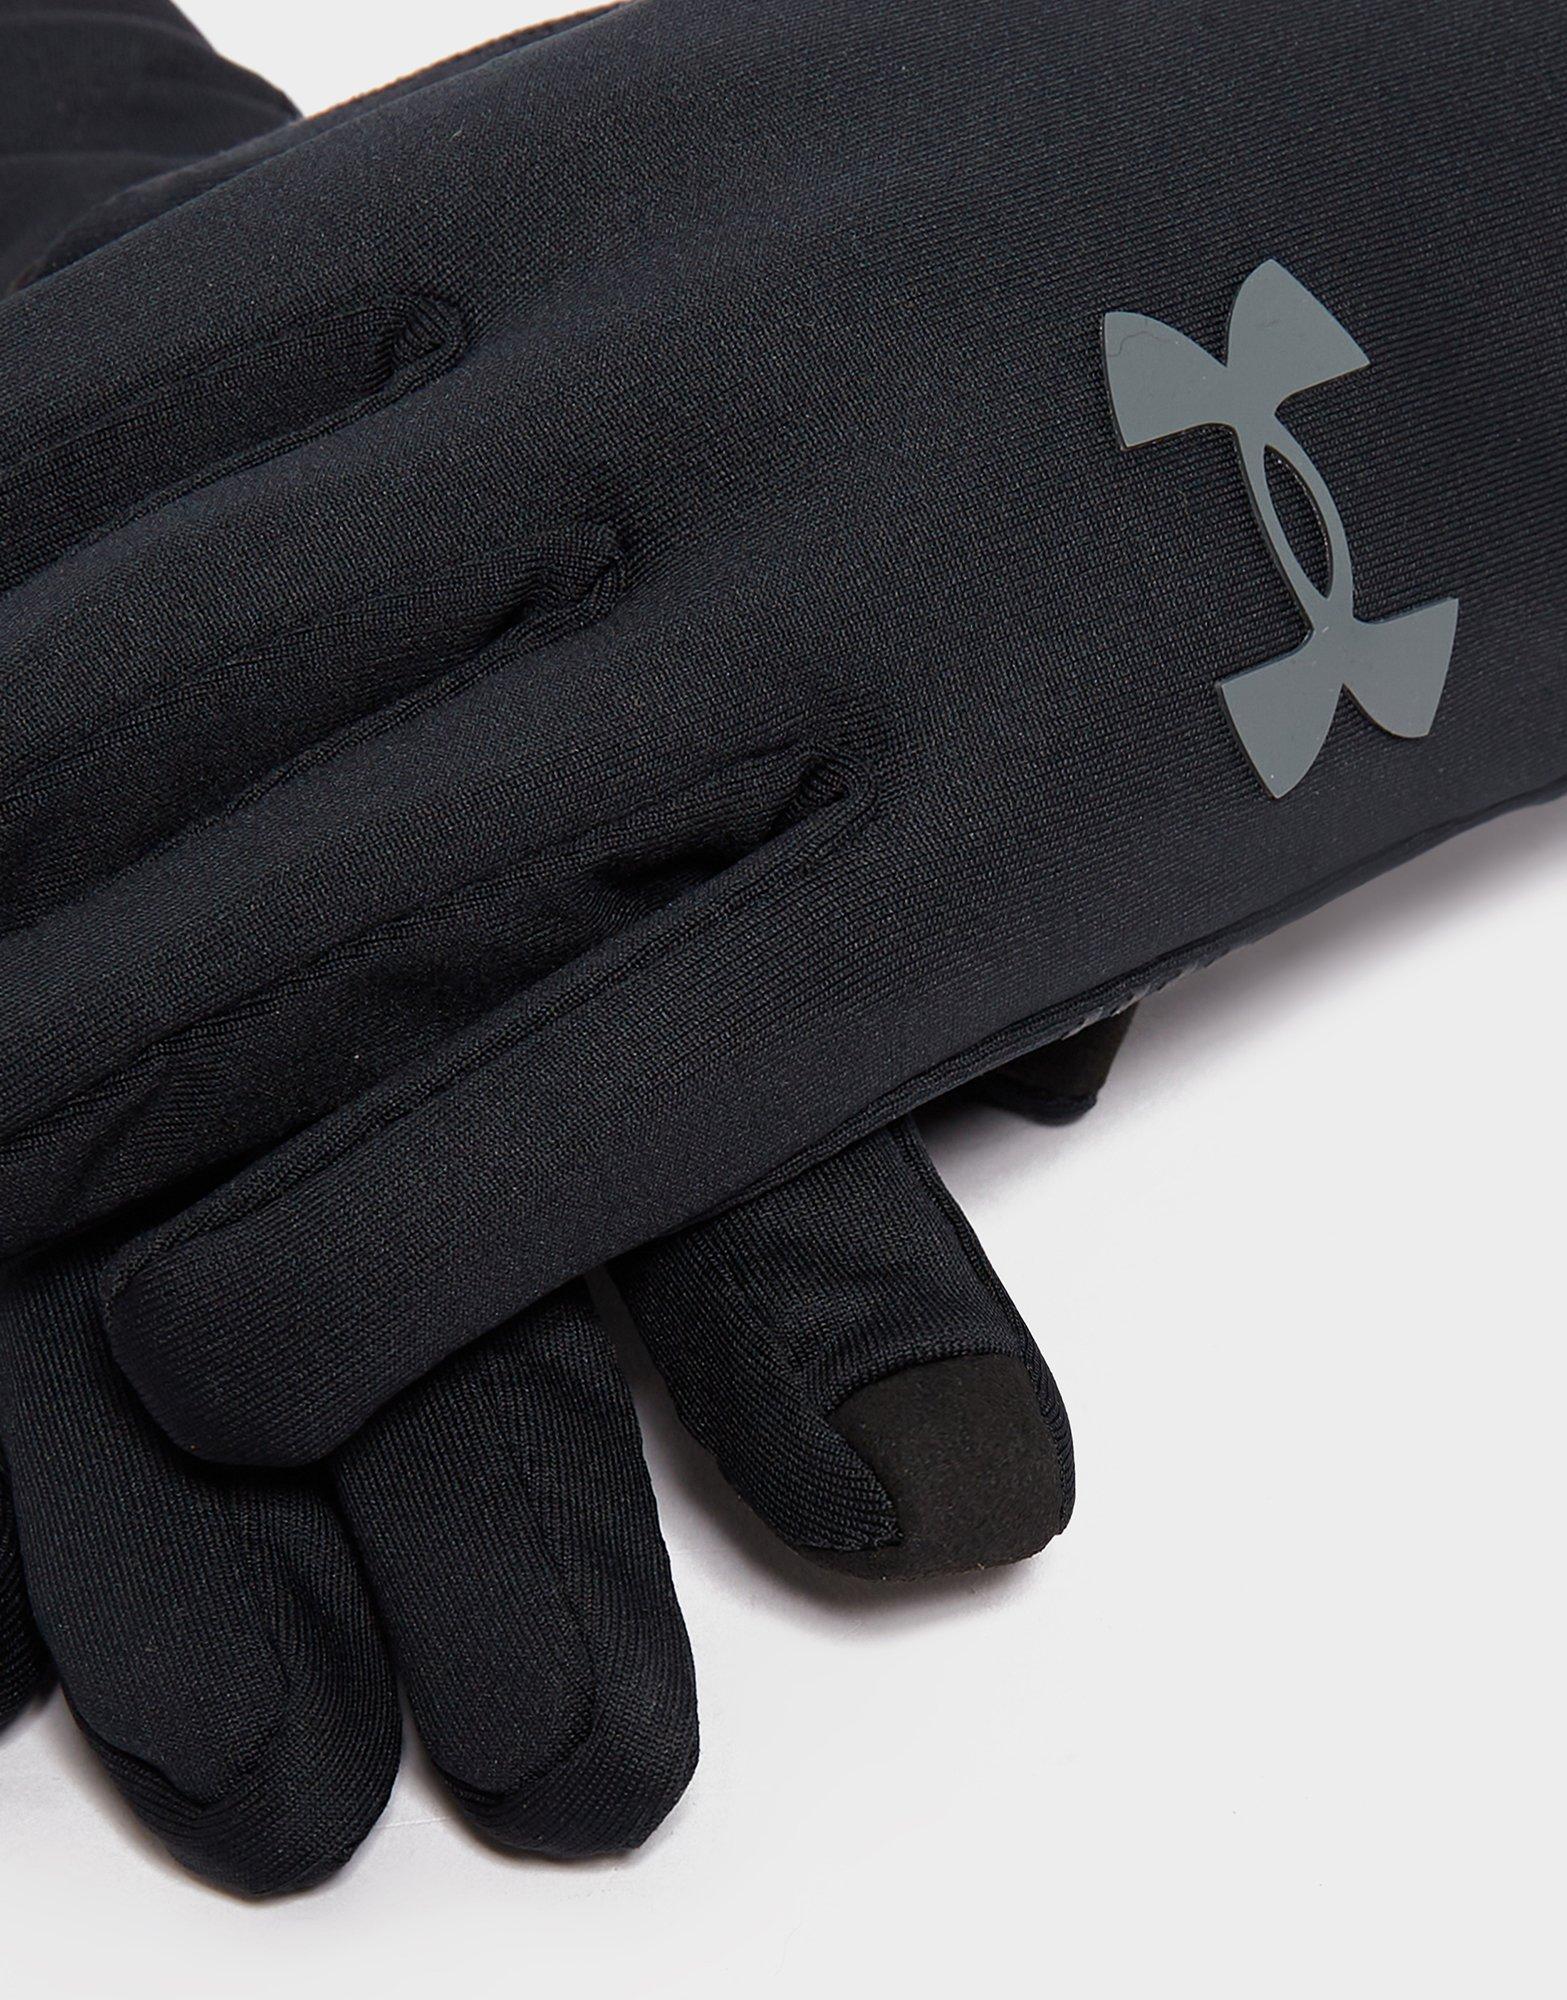 Under Armour Armour Liner Gloves, Black/Black, Medium, Gloves